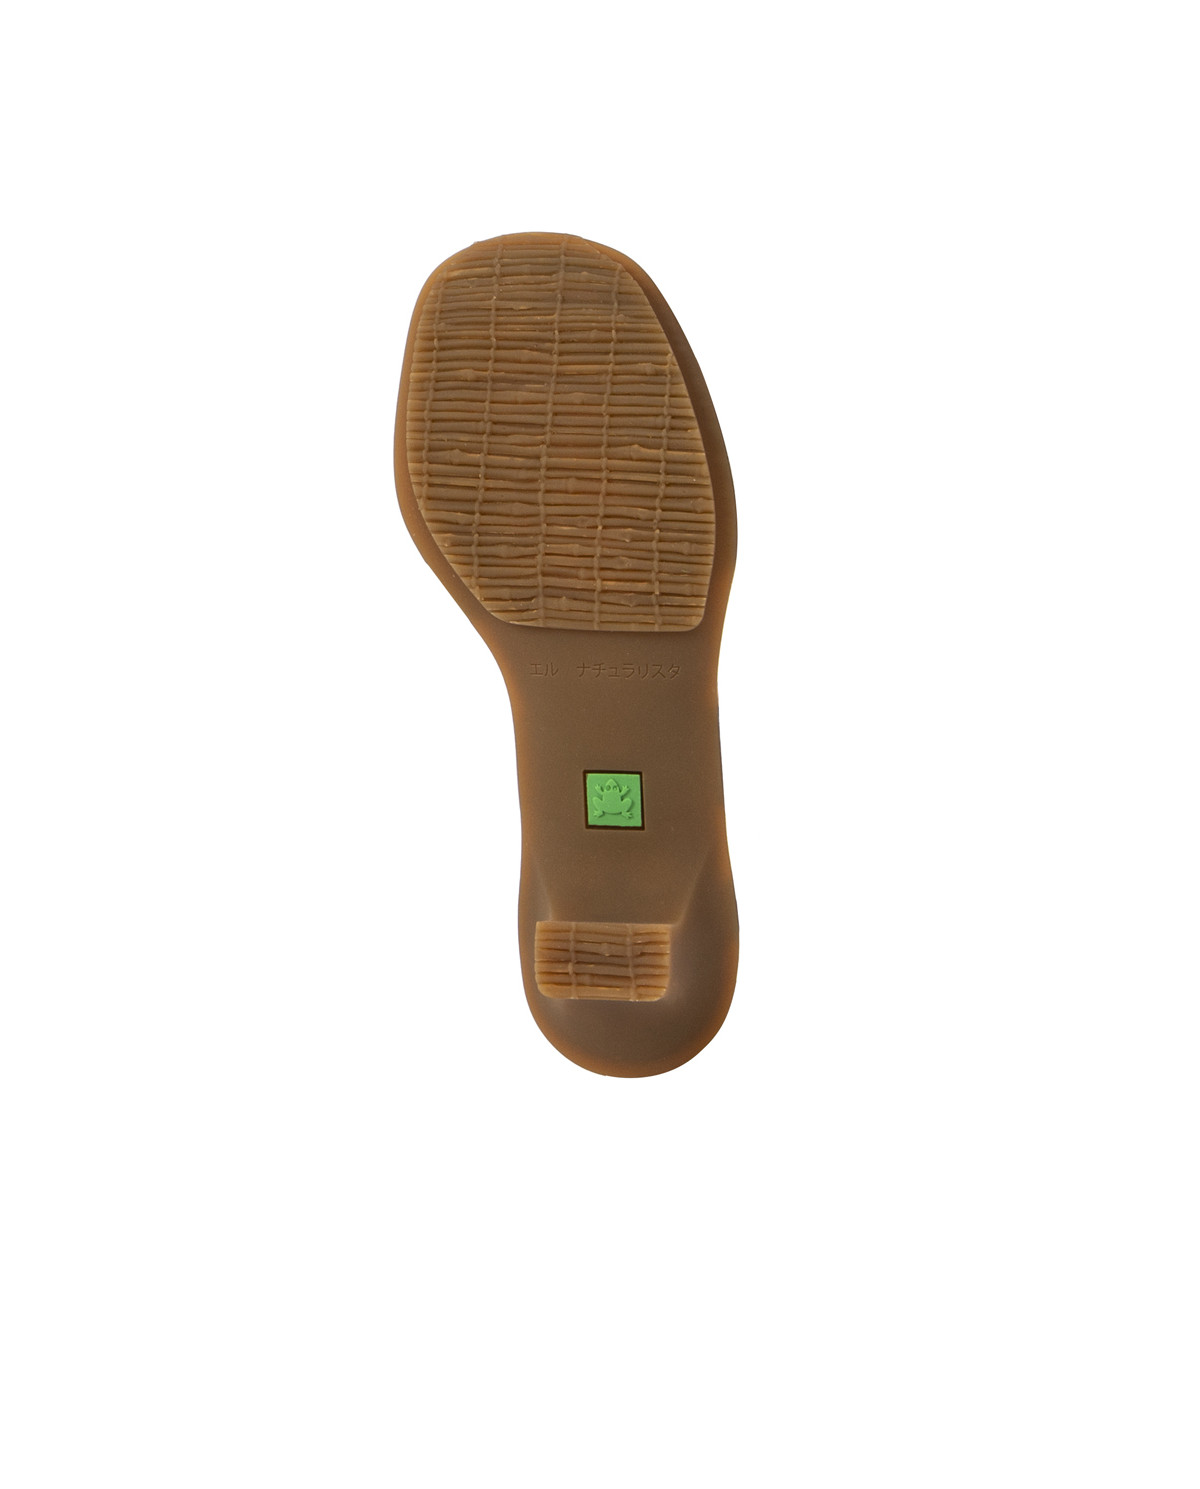 Sandales confortables en cuir tréssé à petit talon - Vert - El naturalista